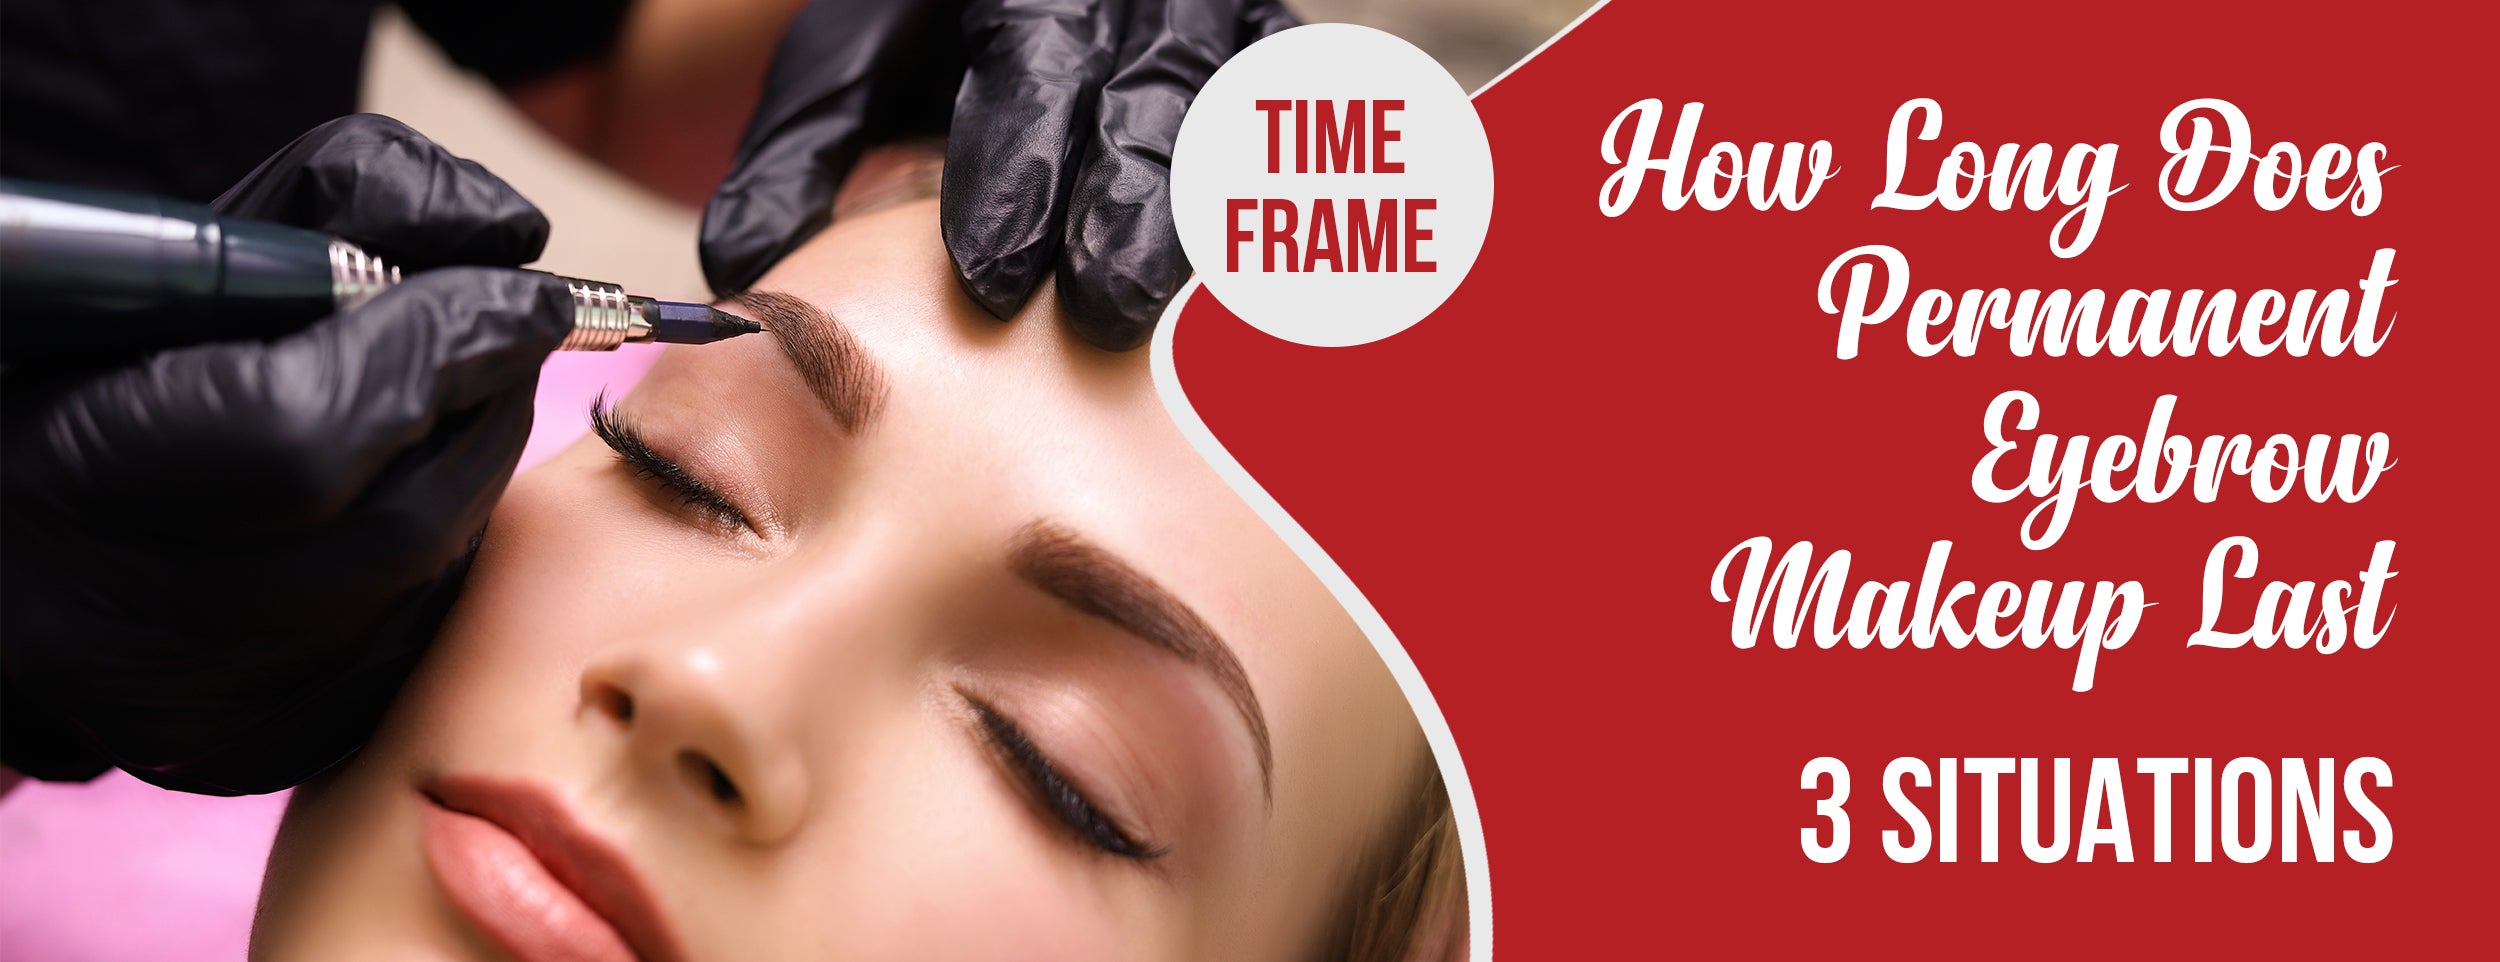 Time Frame & Factors Affecting Permanent Eyebrow Makeup